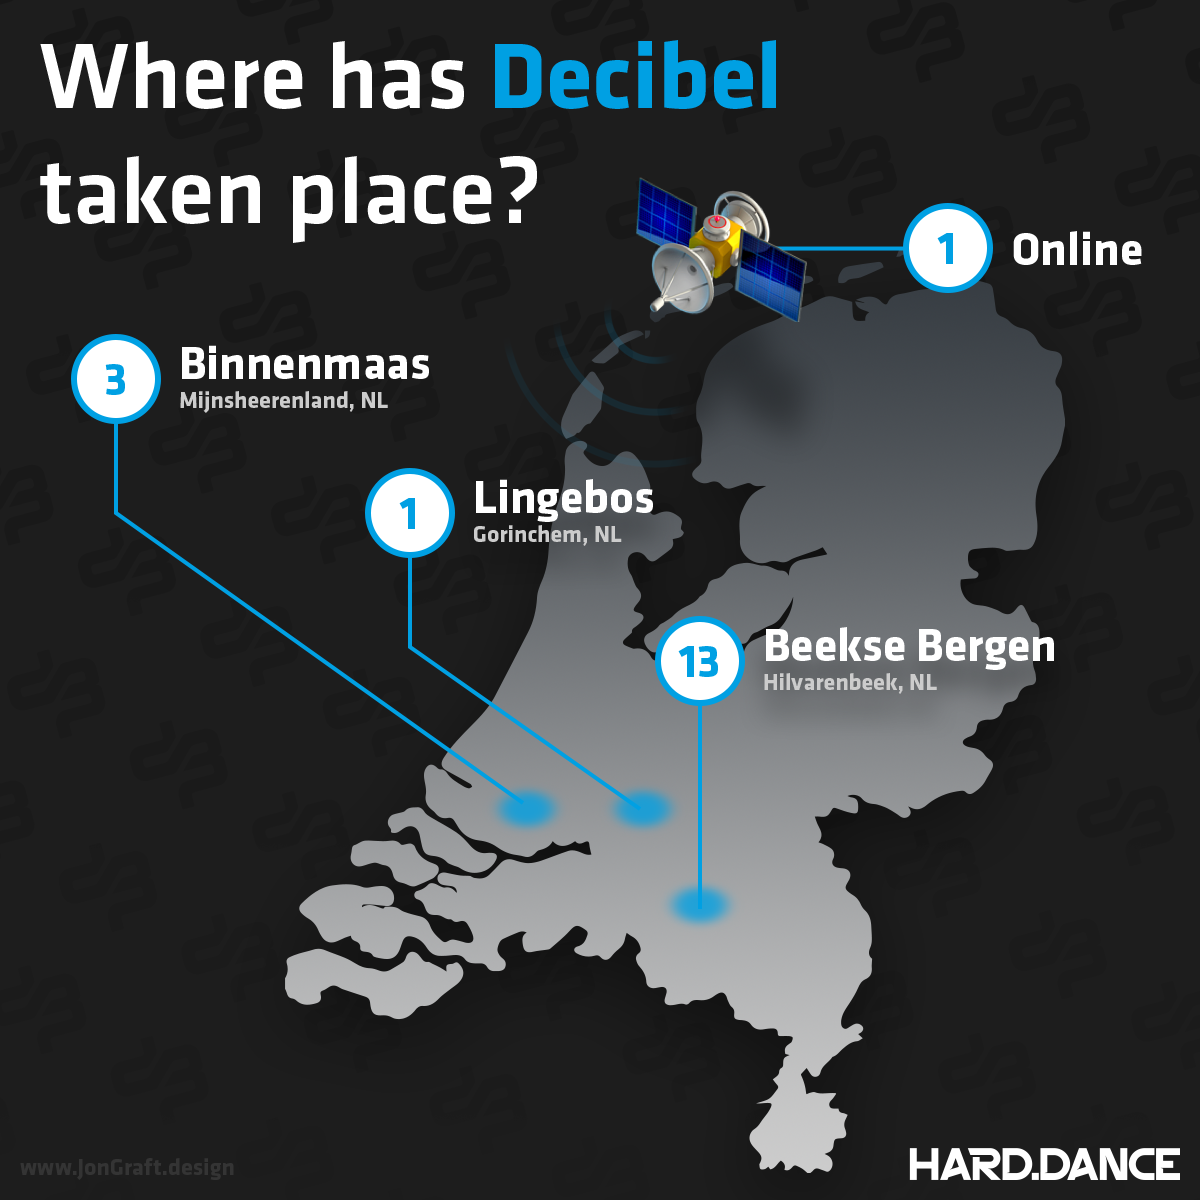 Where has Decibel taken place infographic.